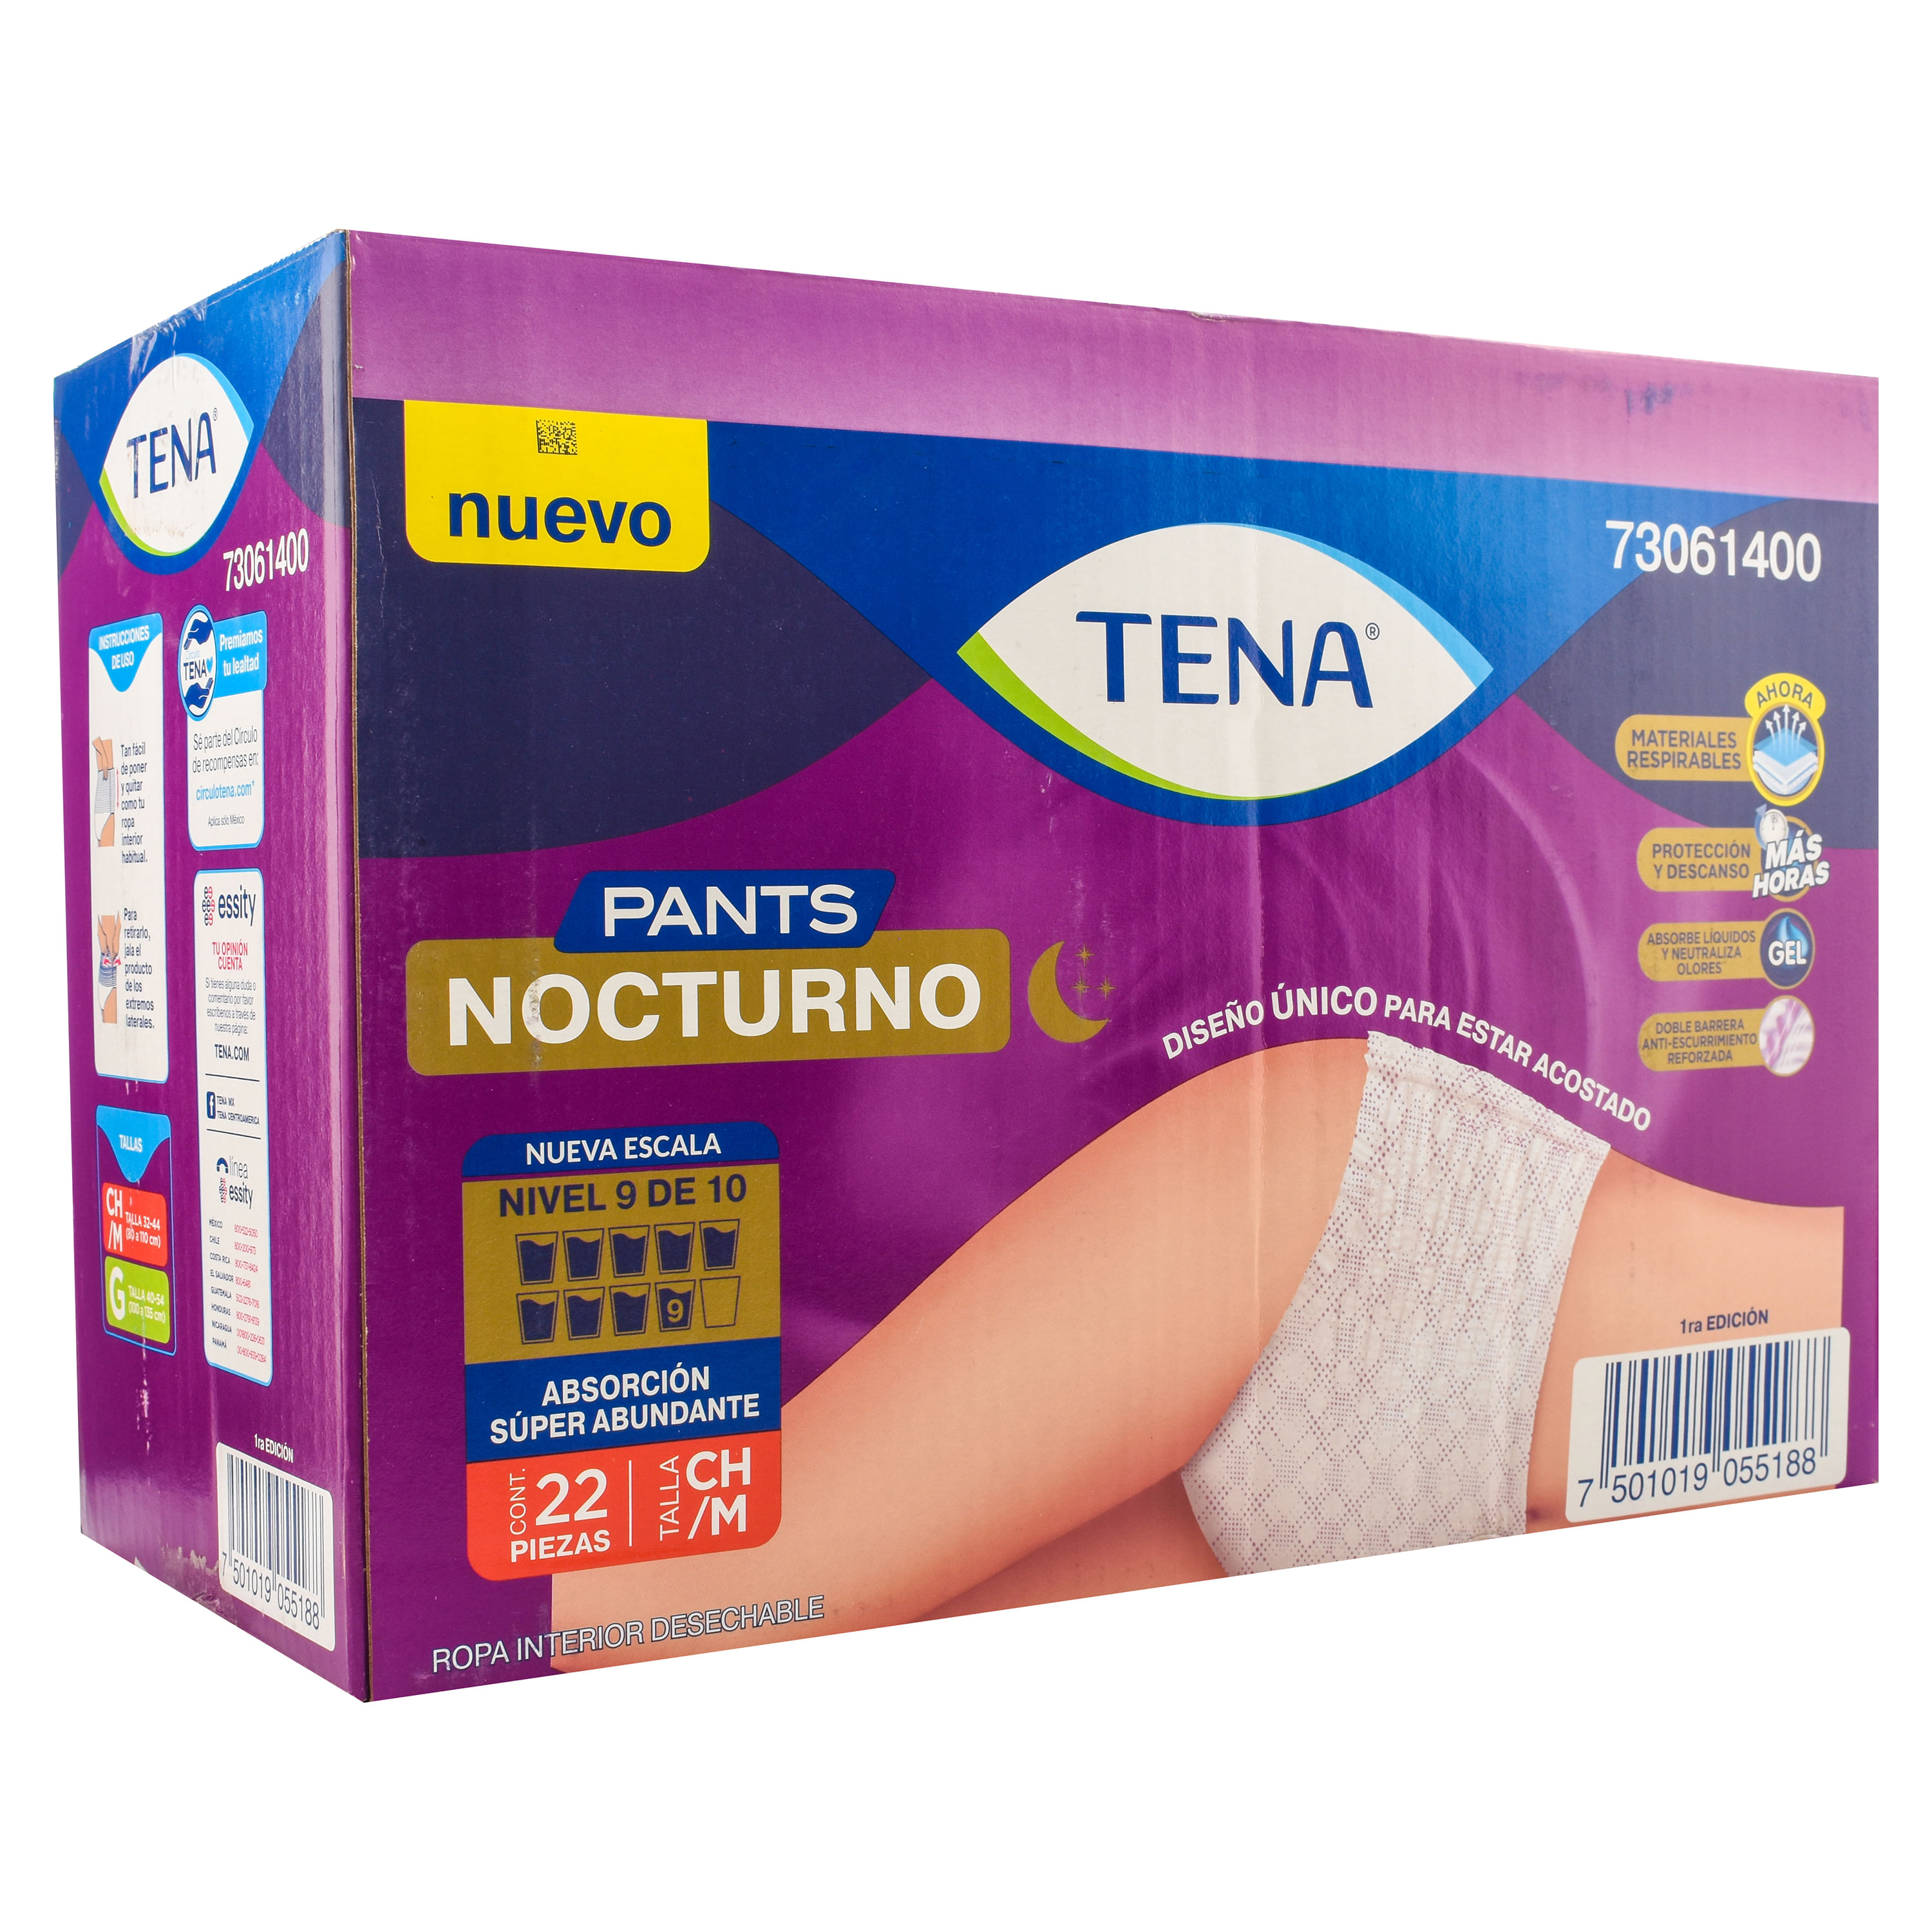 Comedia de enredo Discriminar bofetada Comprar Pants Tena Nocturno Talla M 22 unidades | Walmart Costa Rica